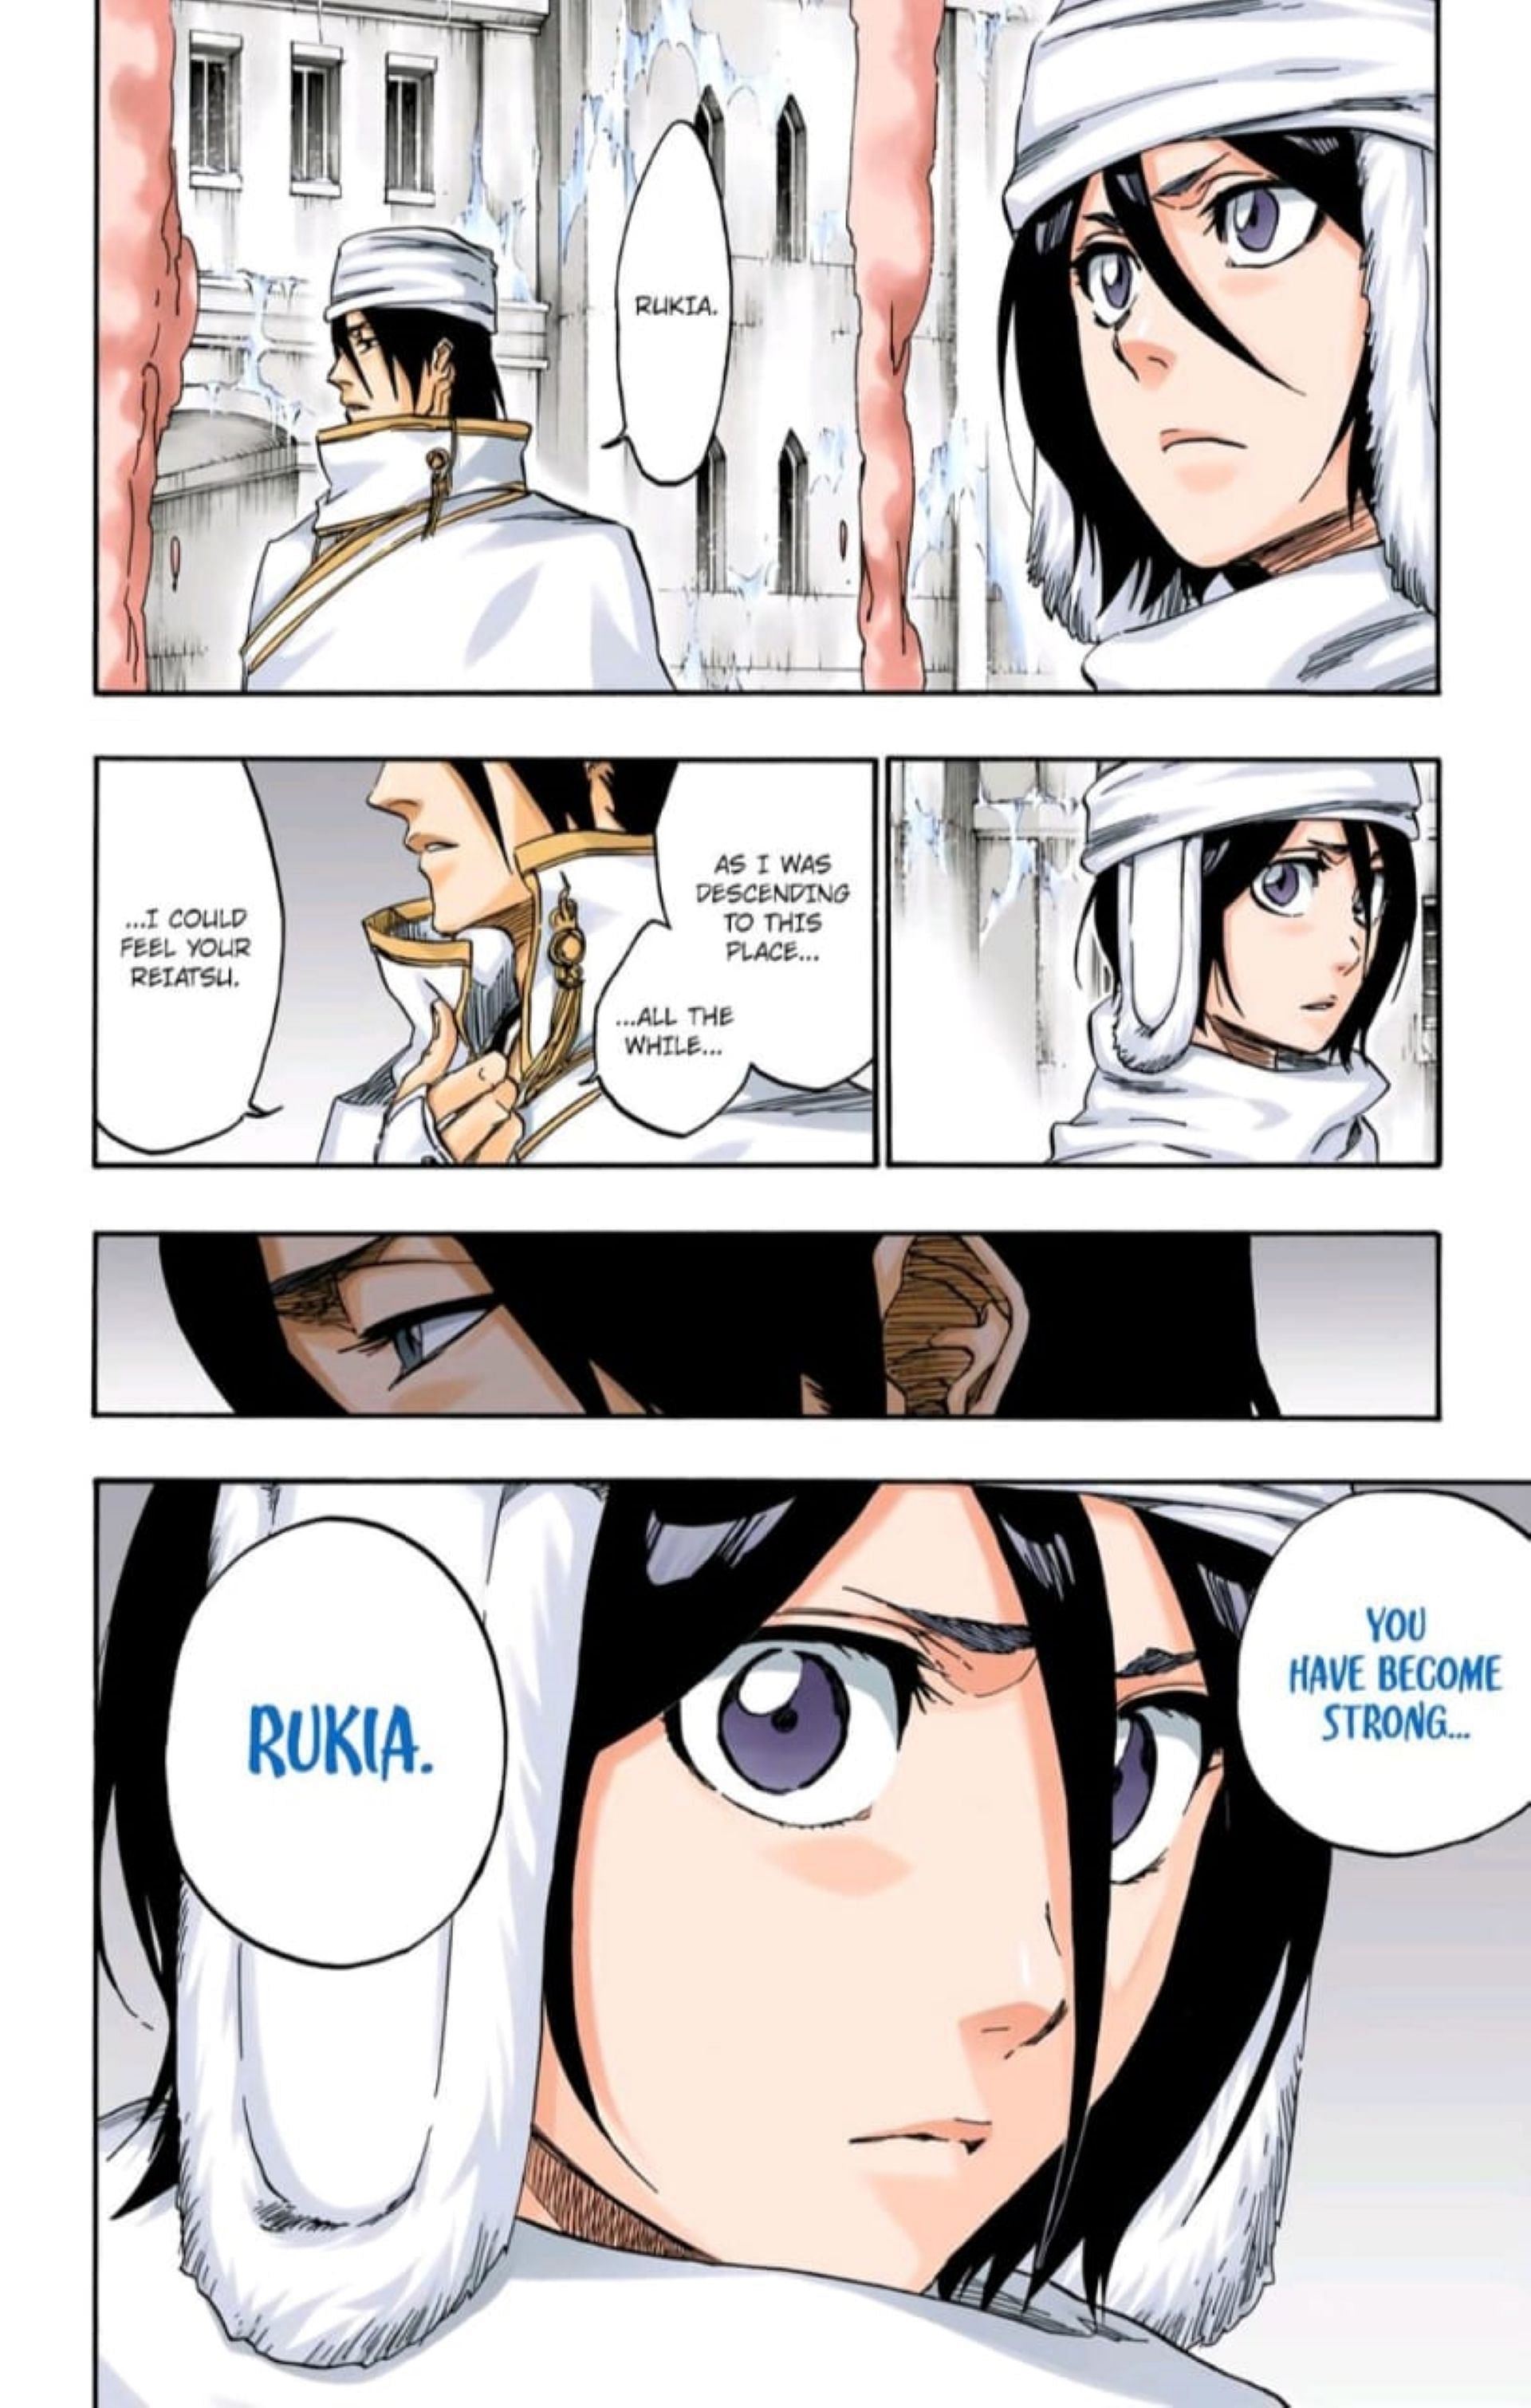 Byakuya acknowledging the strength of Rukia (Image via Studio Pierrot)